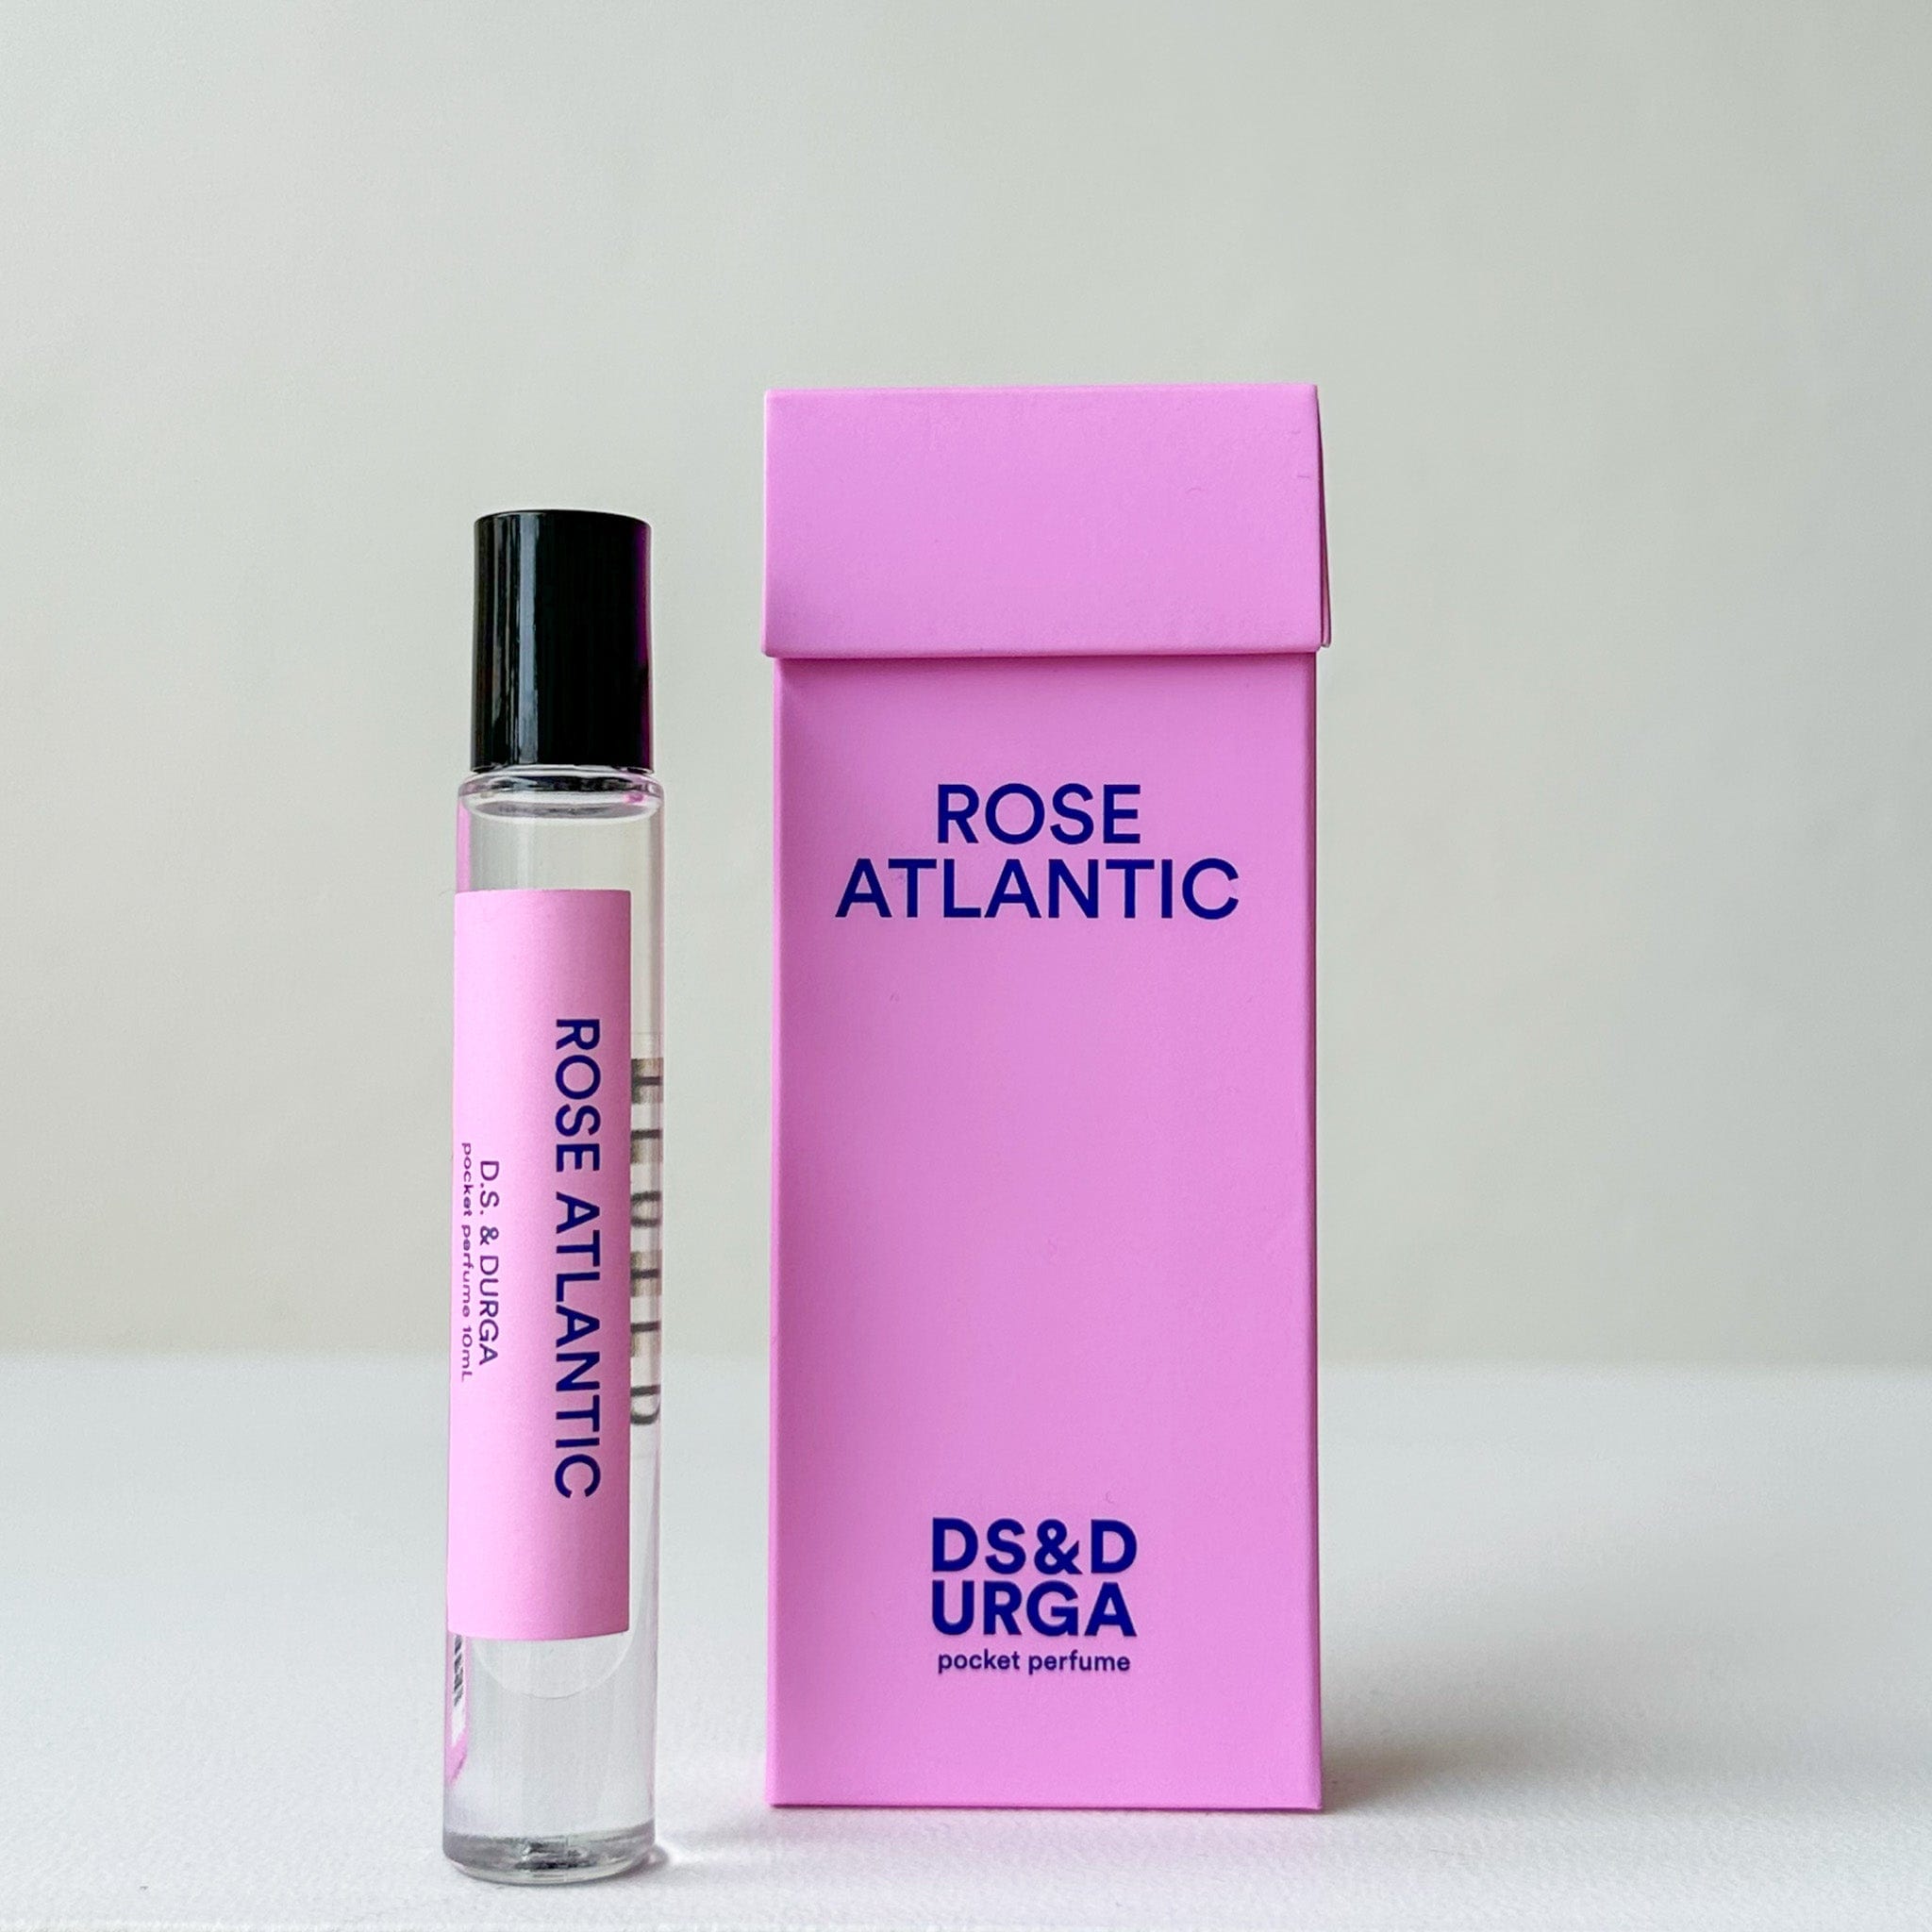 DS DURGA Apothecary Rose Atlantic D.S. & DURGA Pocket Perfume Oil